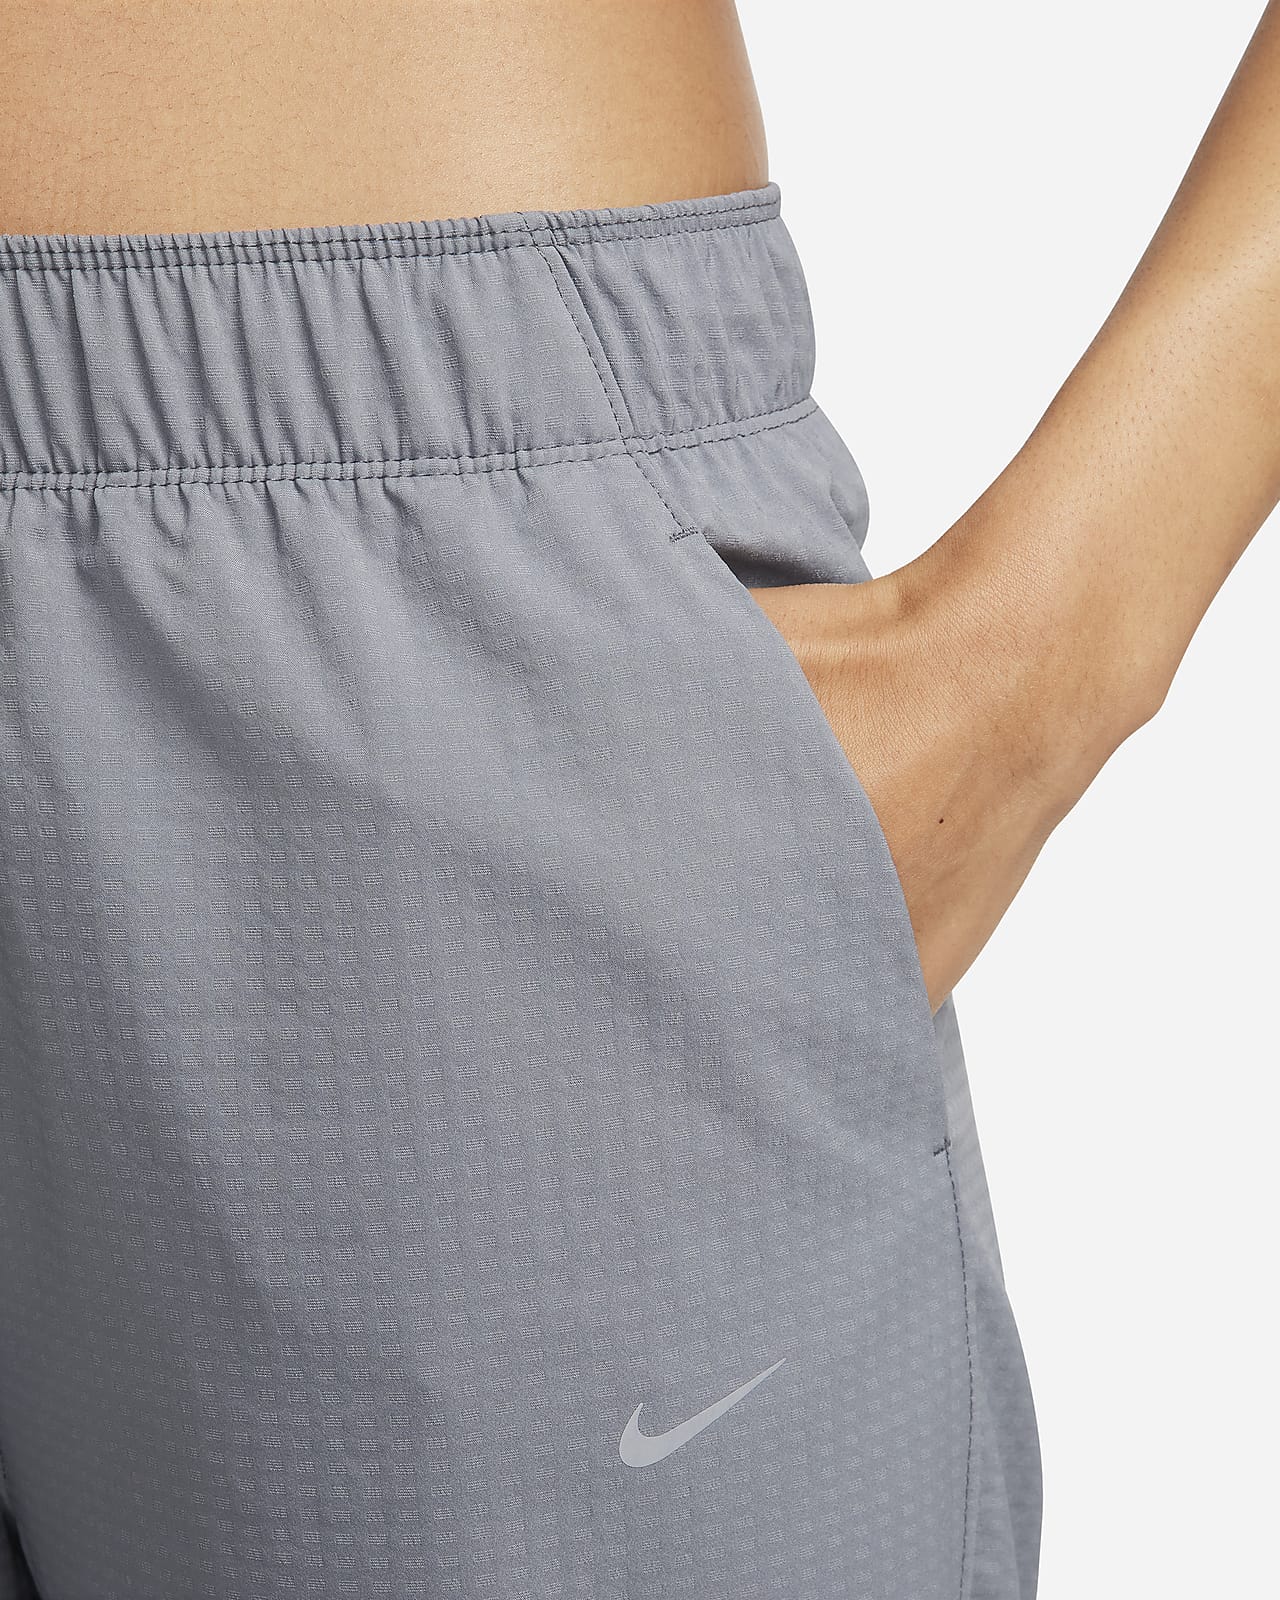 Nike Dri-FIT Fast Women's Mid-Rise 7/8 Running Pants